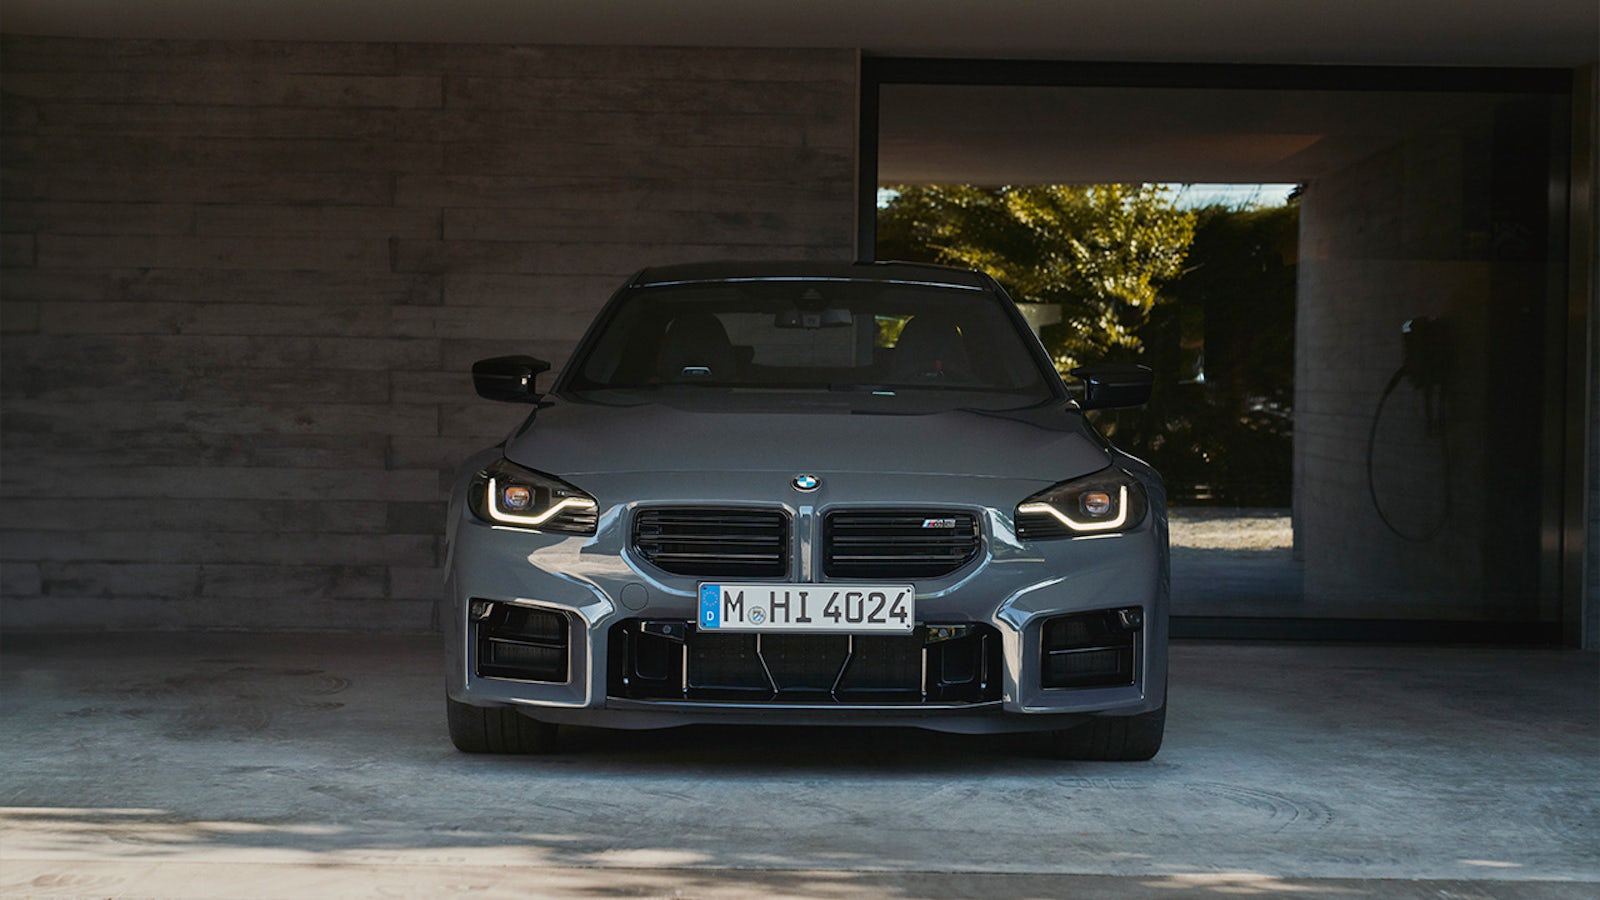 BMW M2 Front